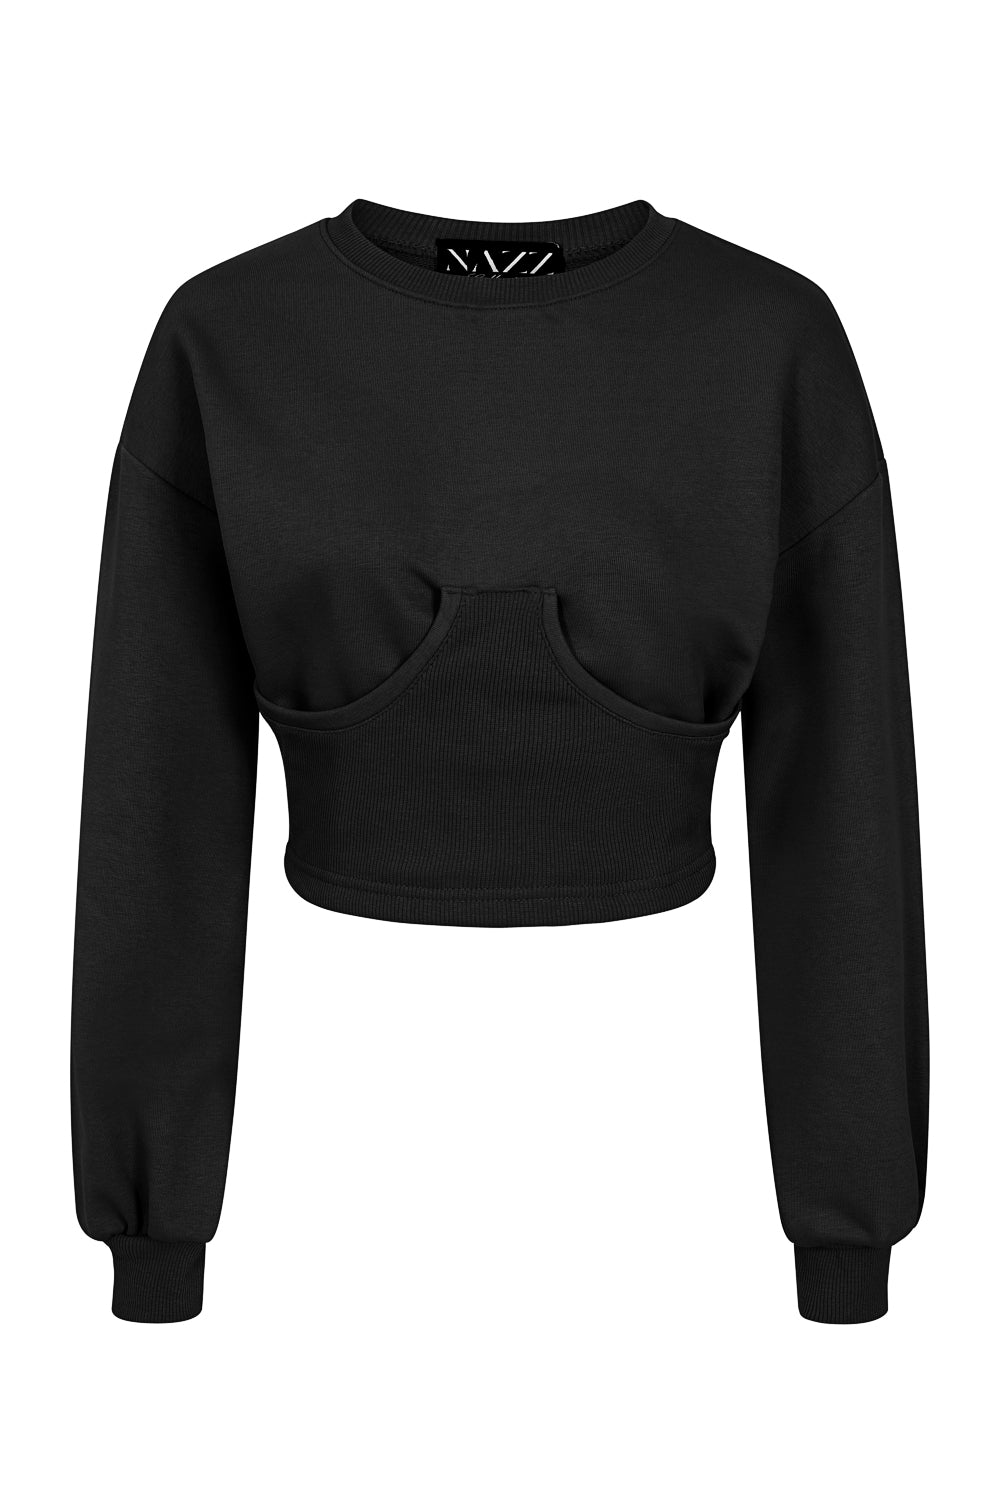 Sasha Black Under Bra Waisted Sweatshirt Tracksuit Set